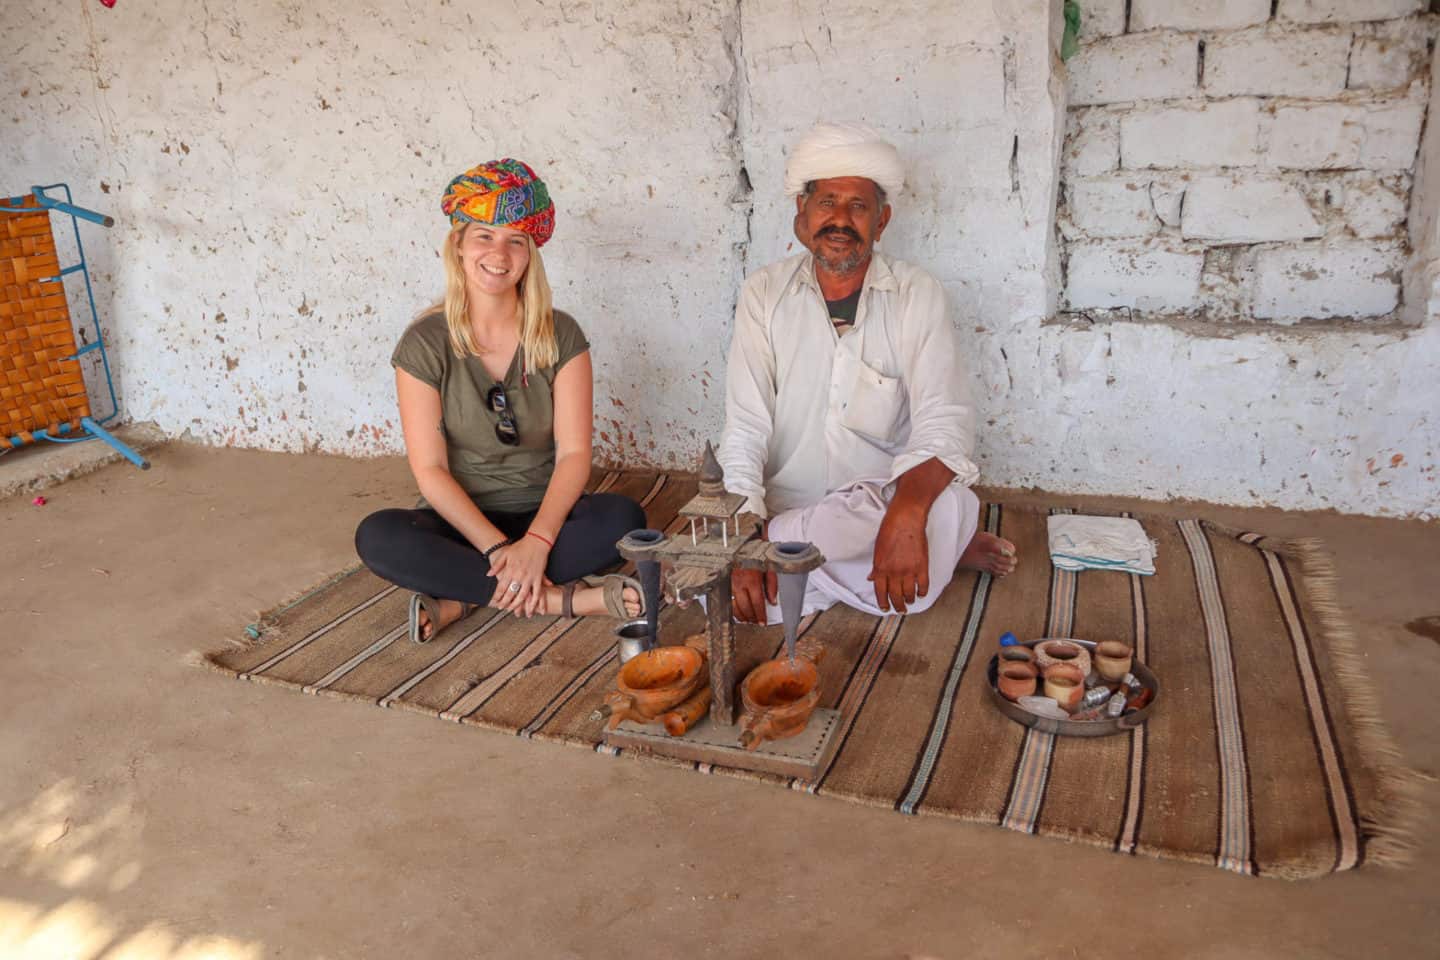 Homestay in Jodhpur Rural Rajasthan India Village